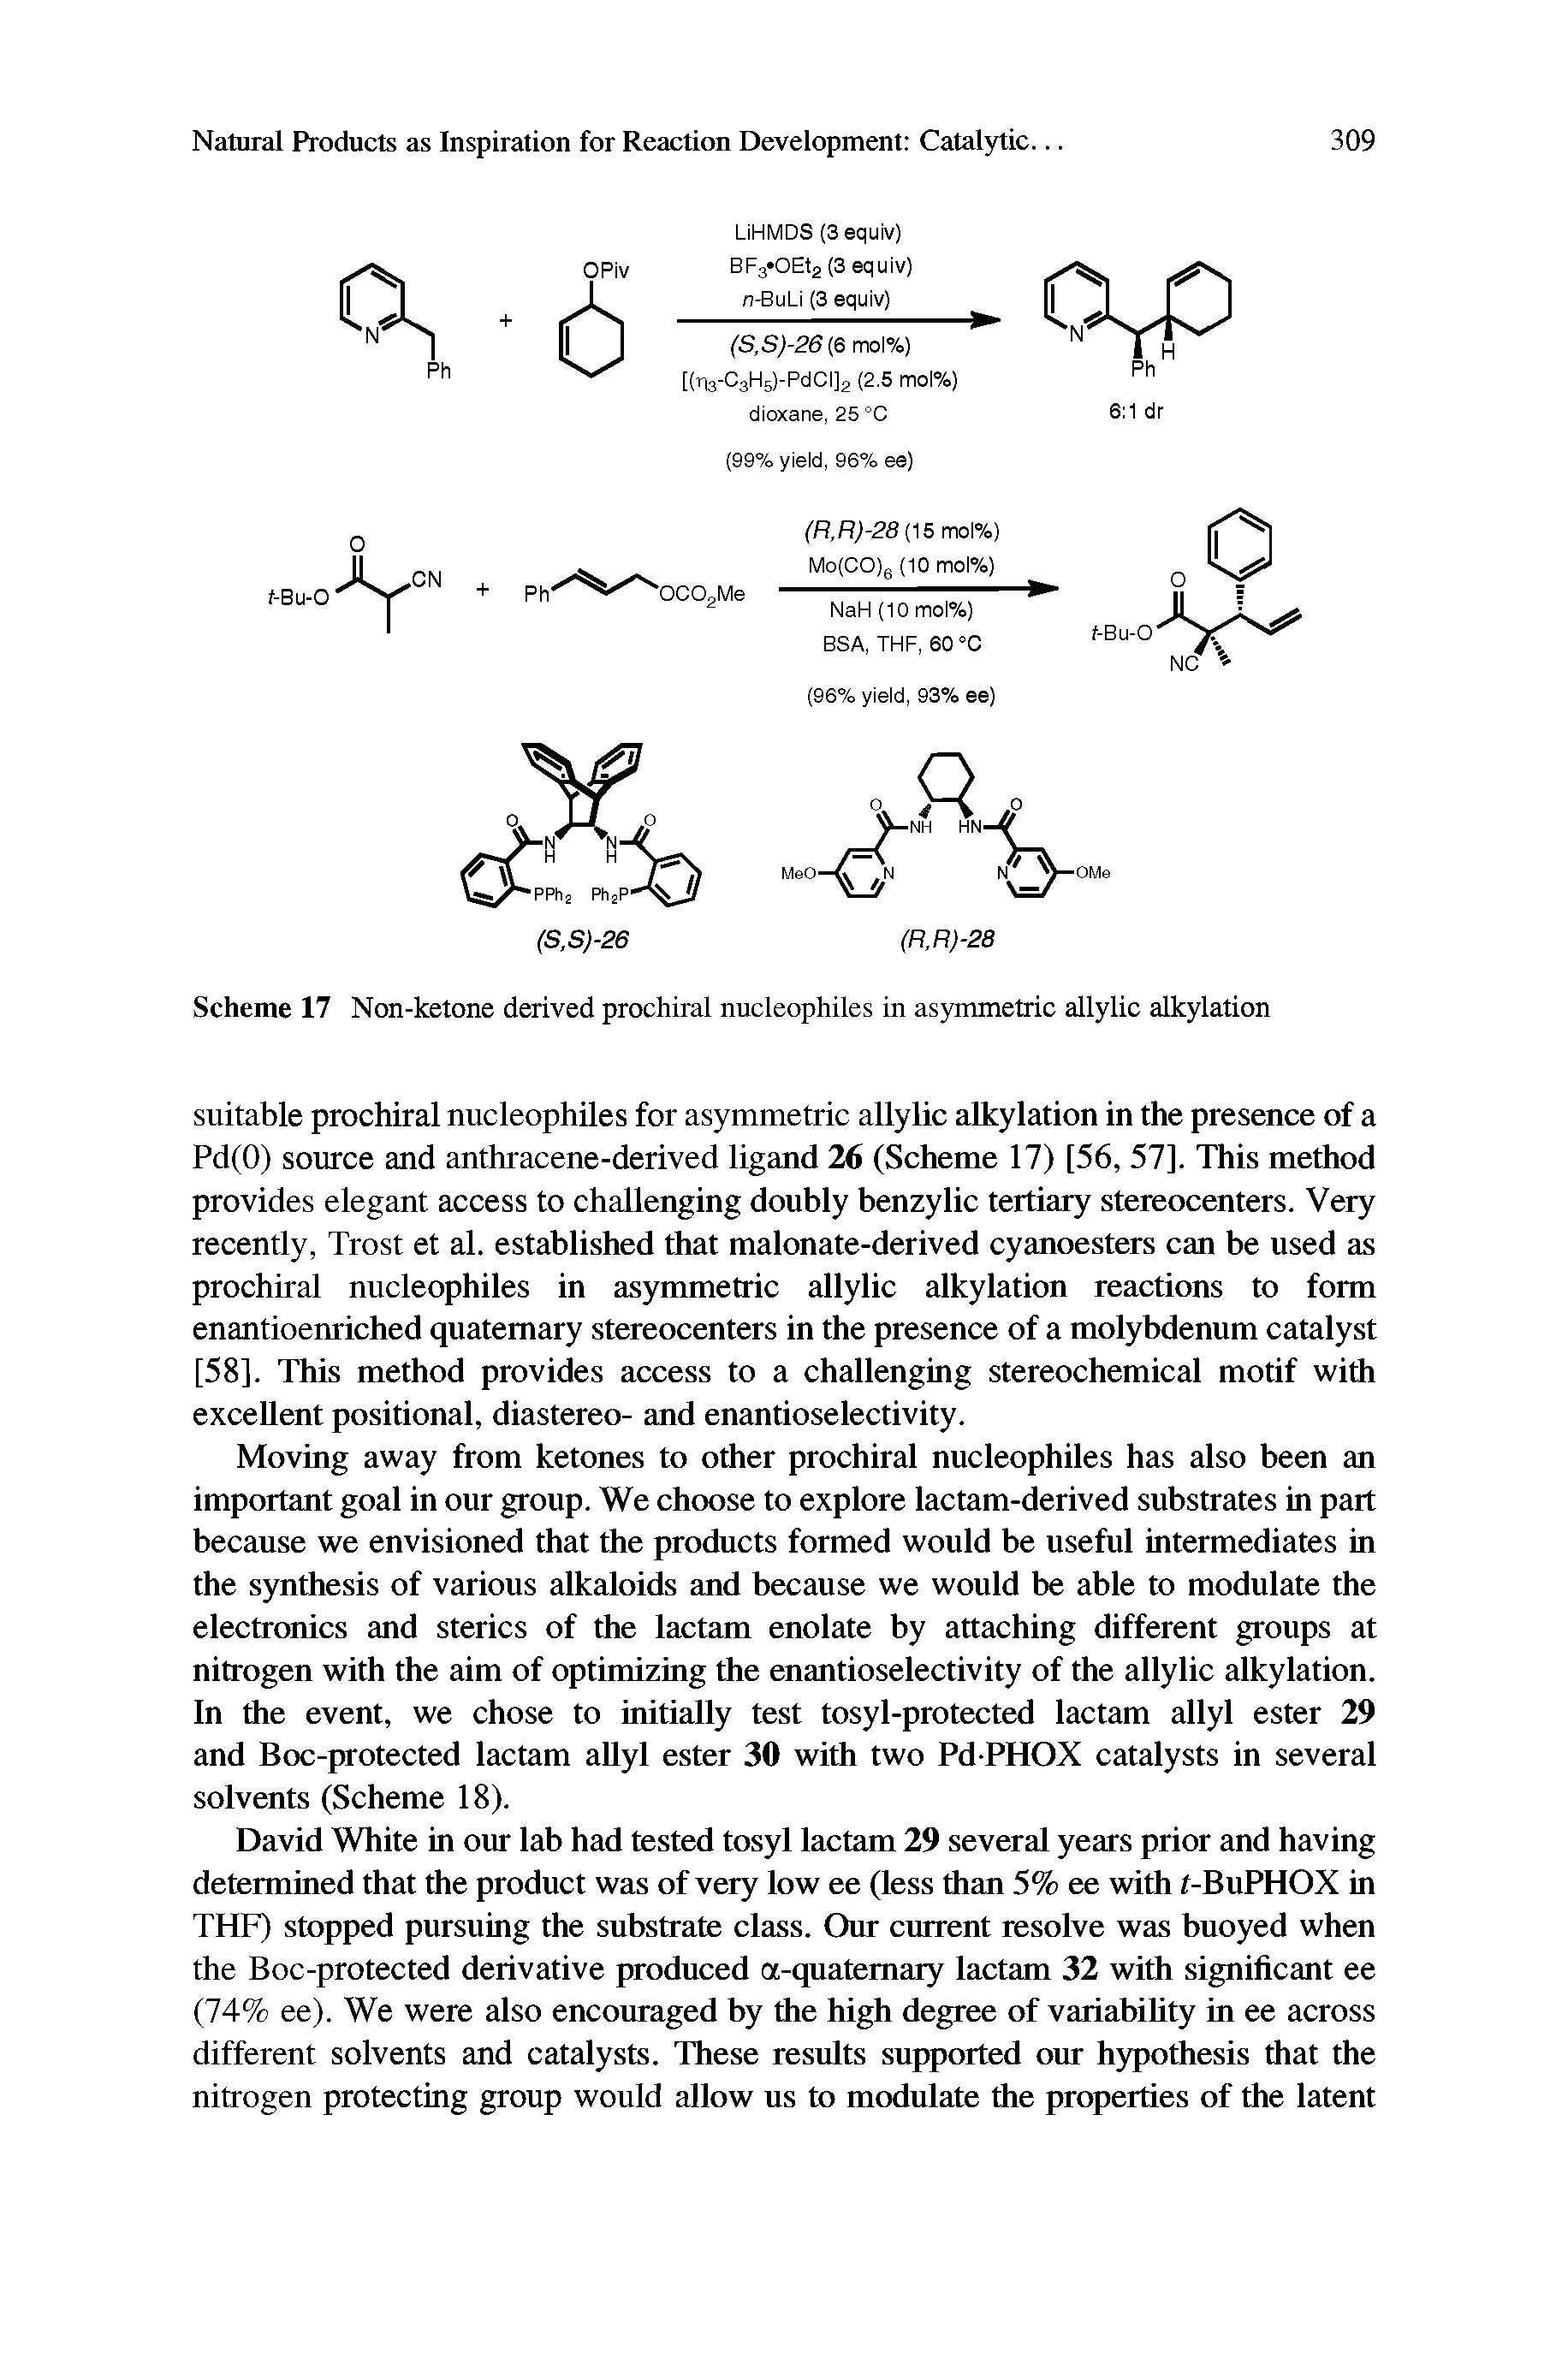 Scheme 17 Non-ketone derived prochiral nucleophiles in asymmetric allylic alkylation...